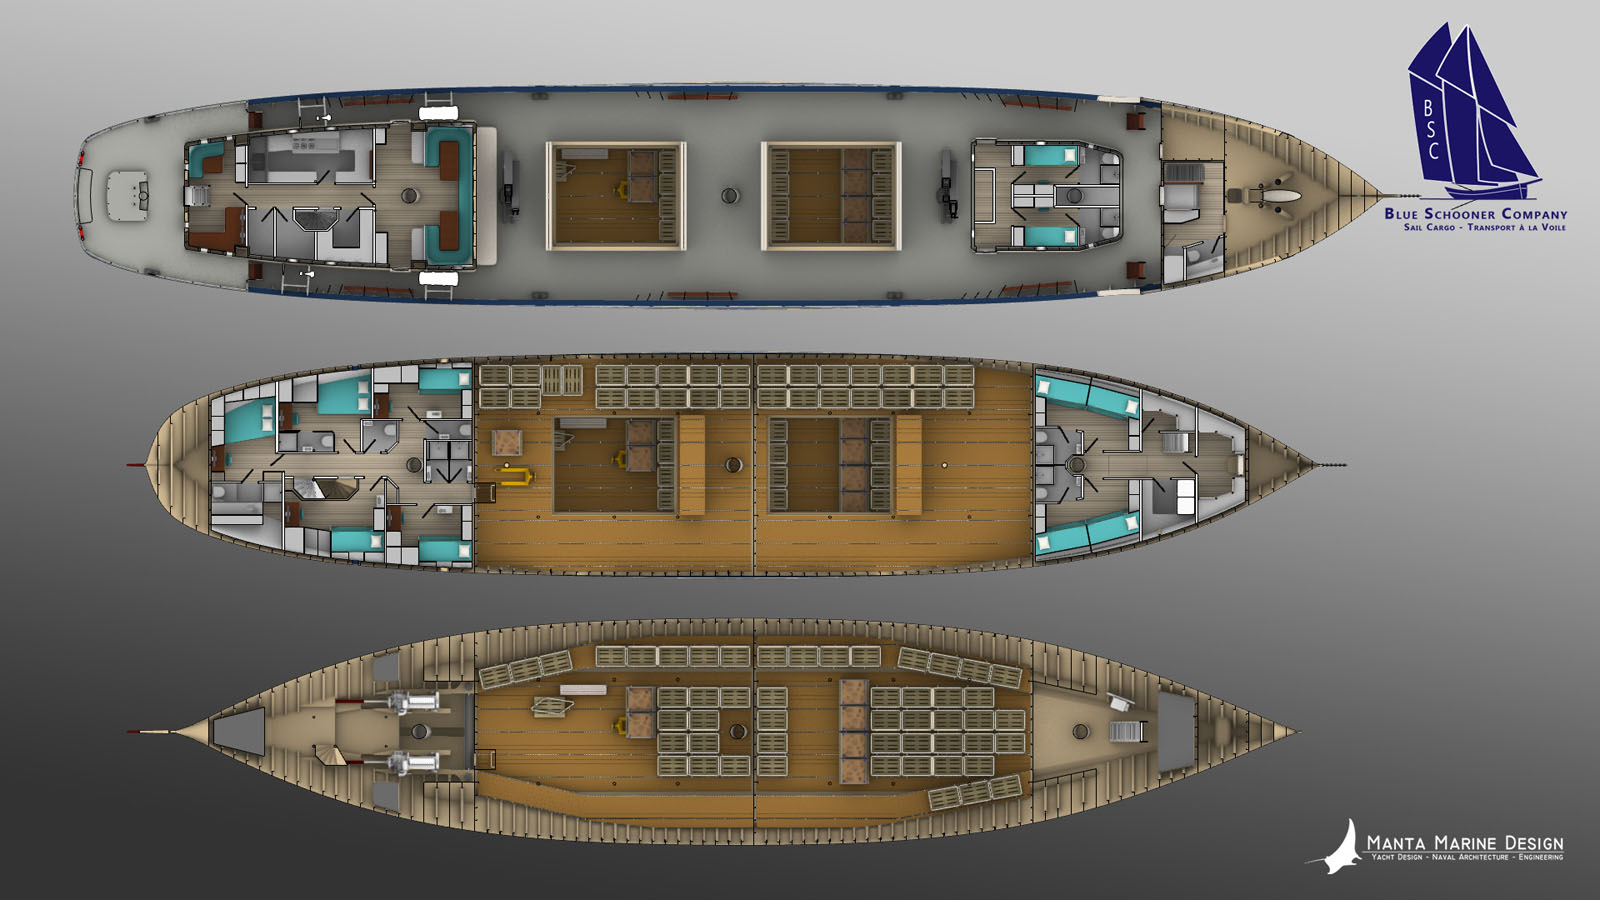 MantaMarineDesign SailingCargoVessel Halifax BlueSchoonerCompany 3